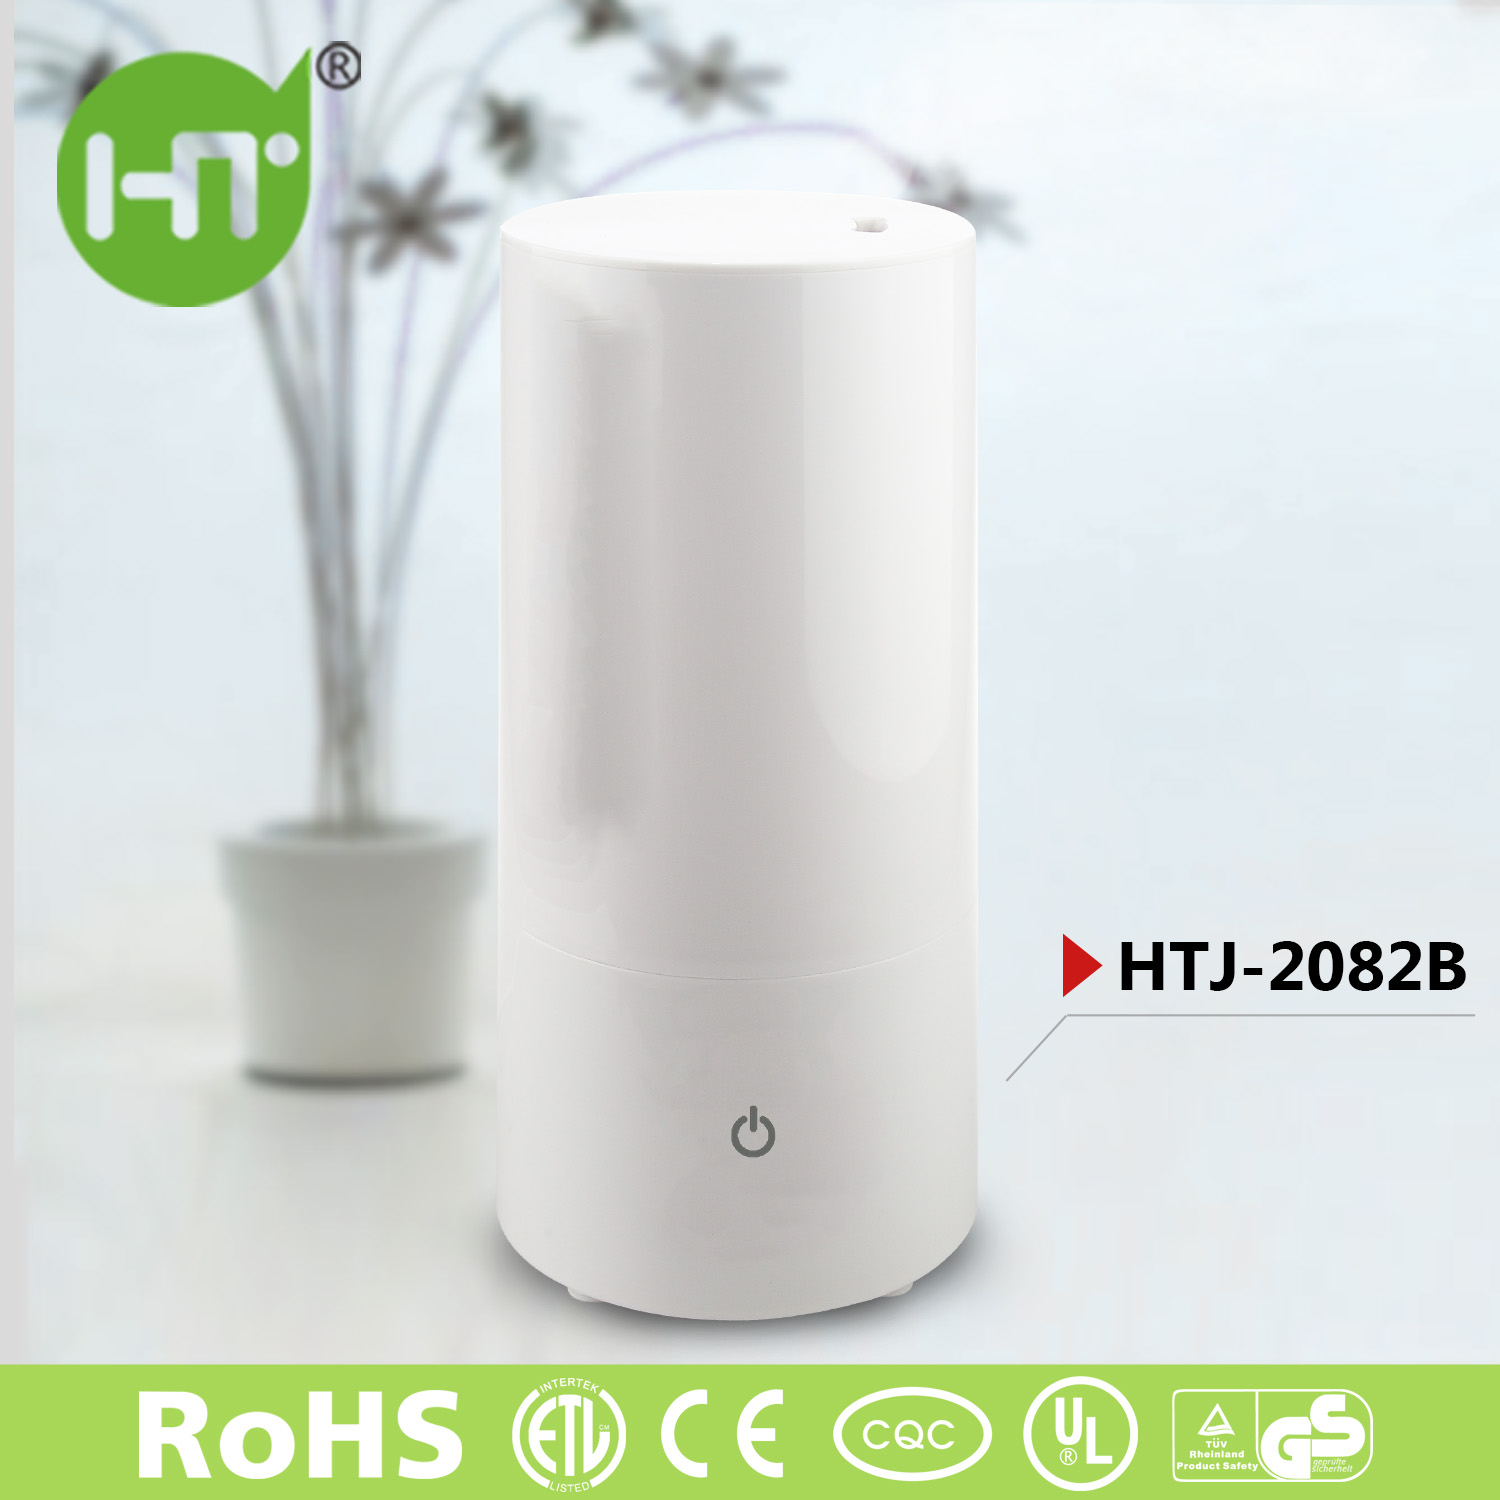 HTJ-2082B 2015 New 1.8L Elegant White Touch Pad Control Cool Mist Ultrasonic Humidifier